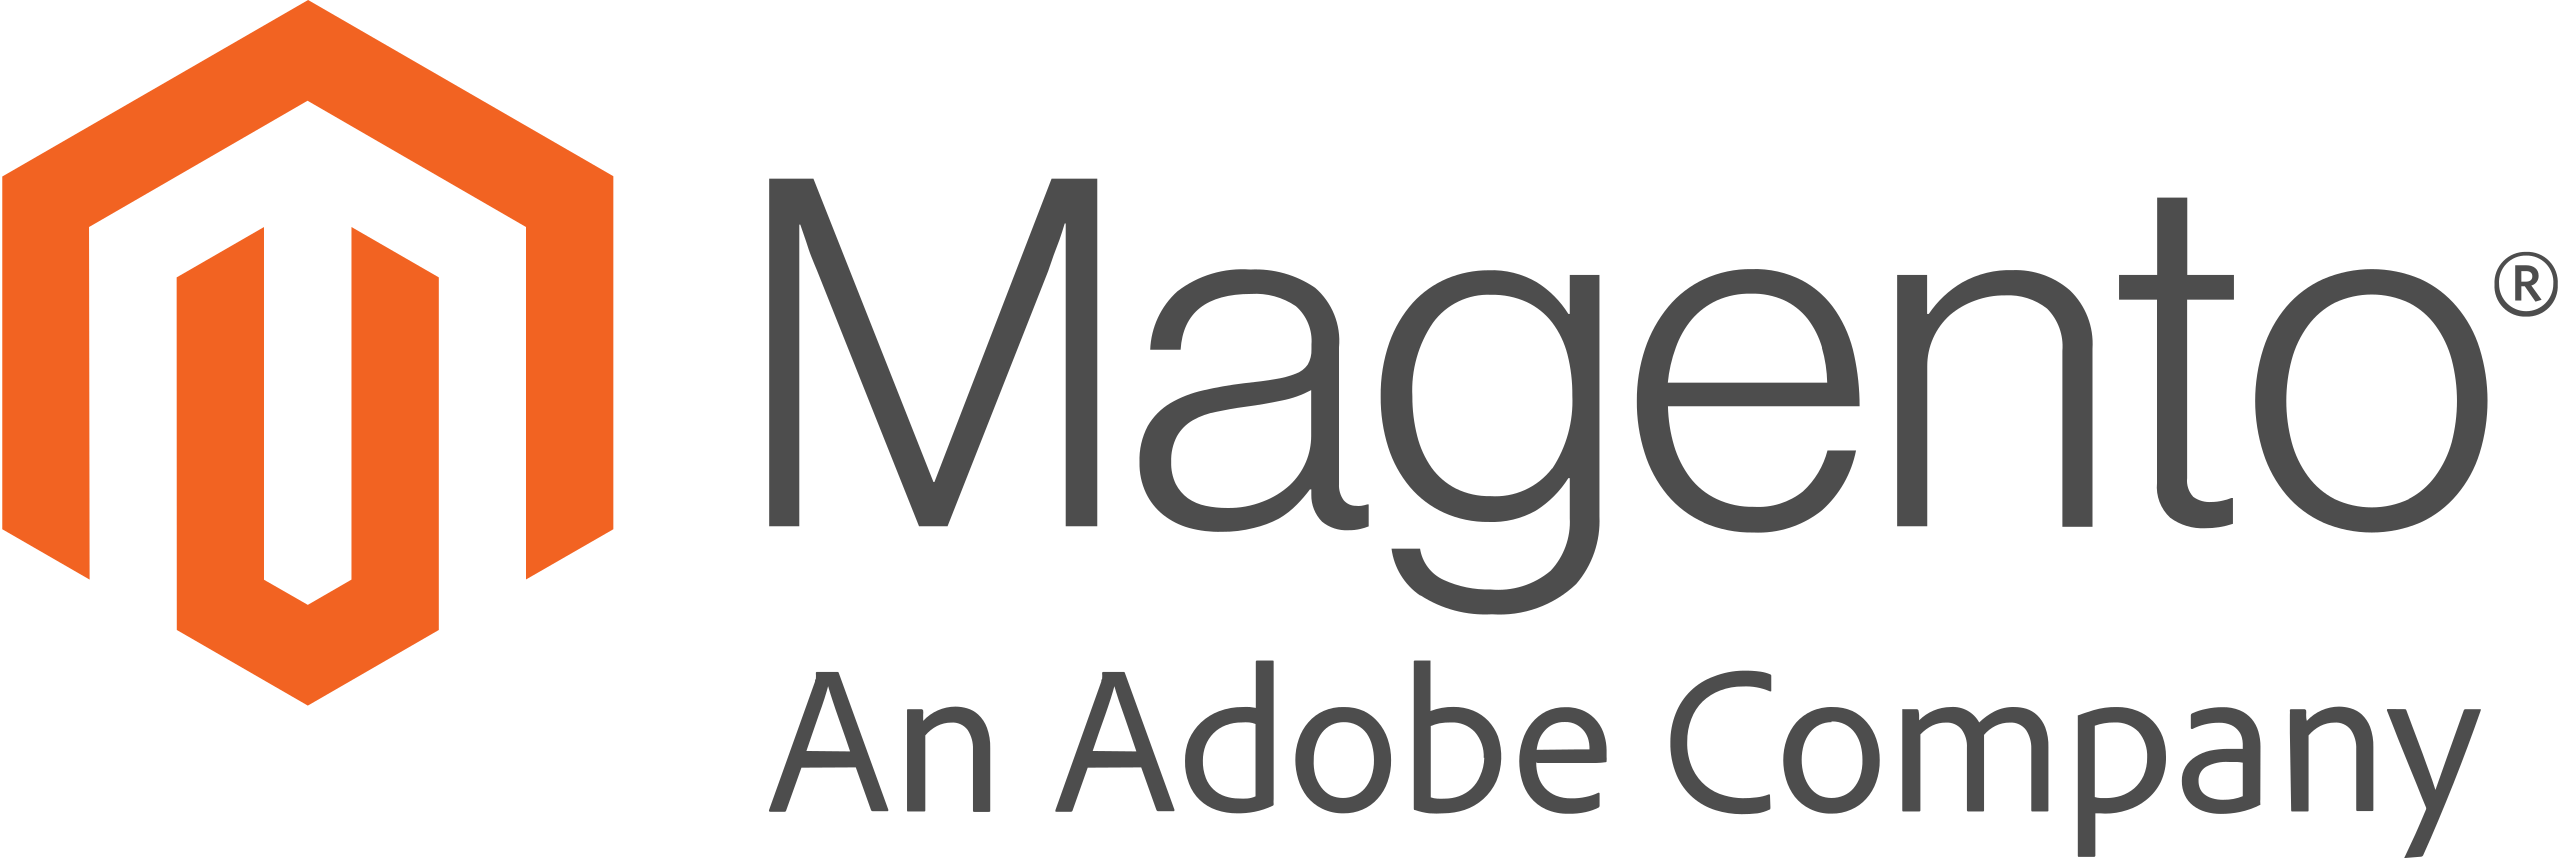 File:Magento Logo.svg - Wikipedia